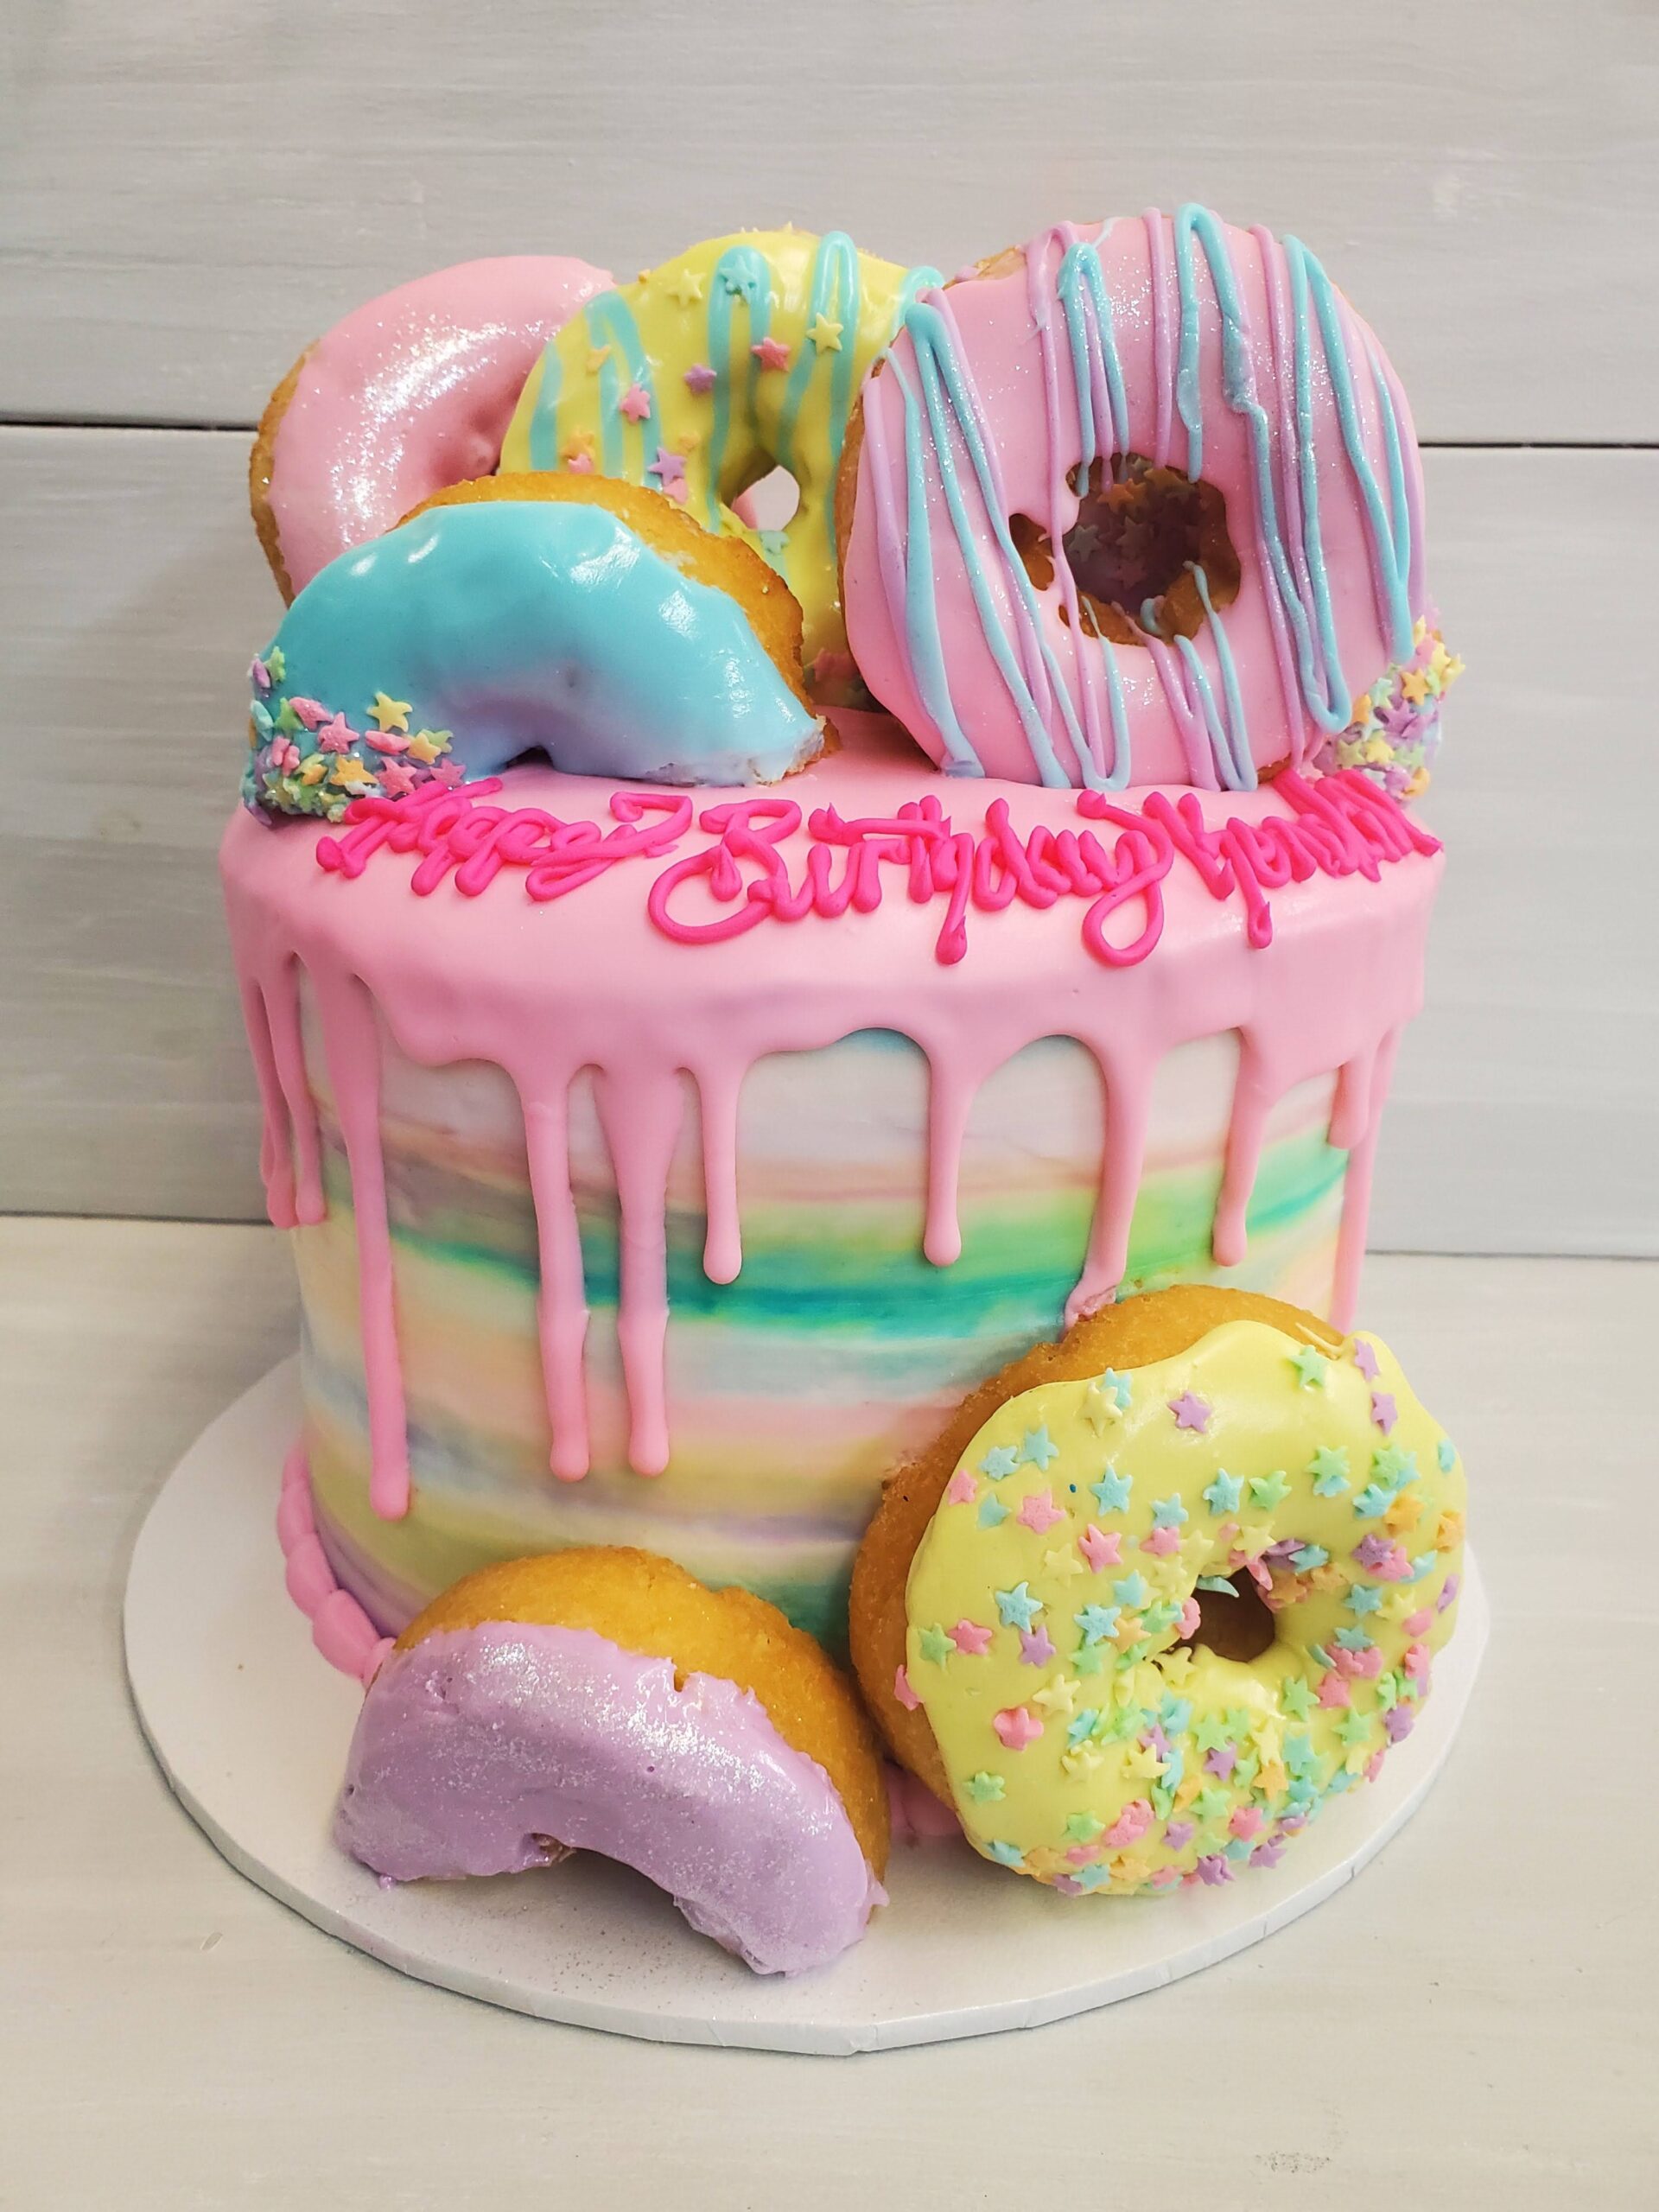 Cake Owls - The Best Birthday Cakes, Cupcakes, Wedding Cakes & Custom Cakes